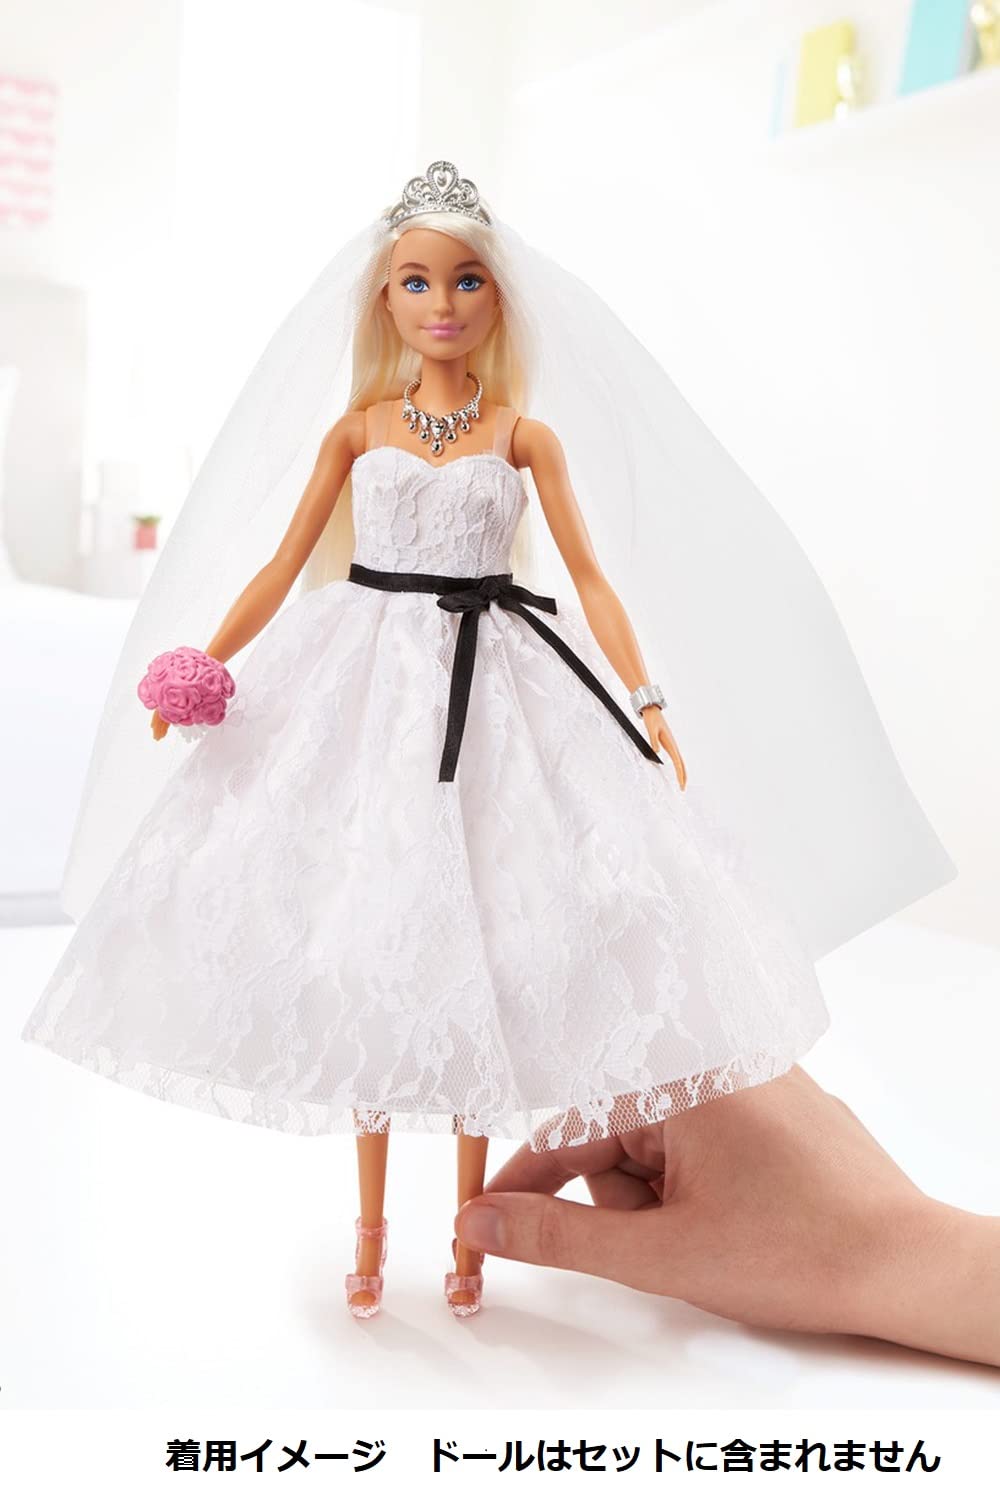 barbie wedding clothes